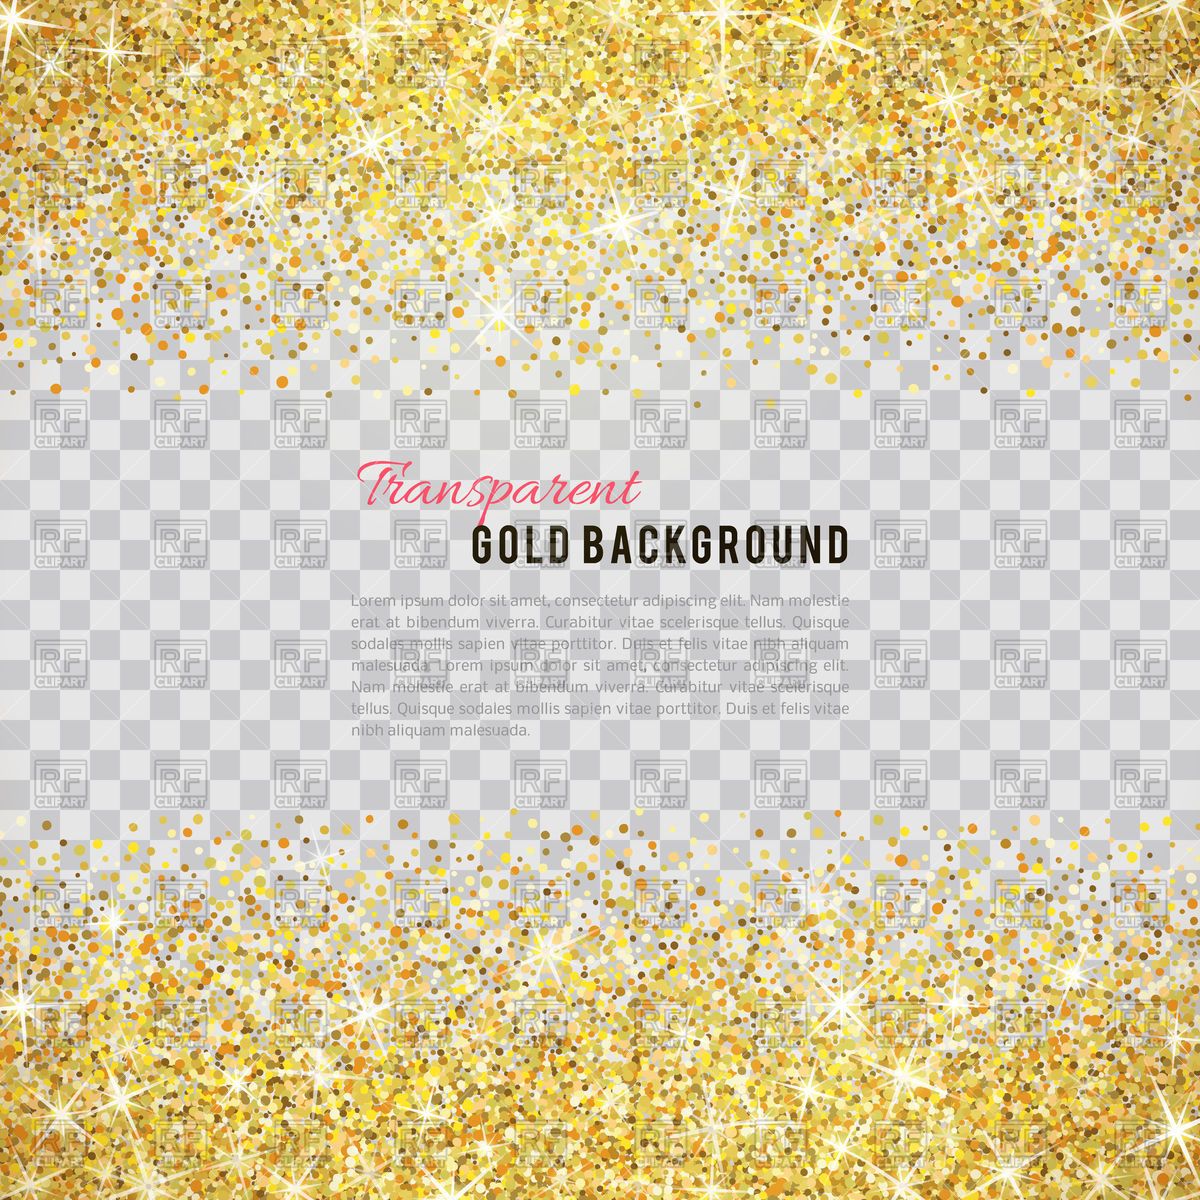 Glitter clipart vector. Gold background image illustration